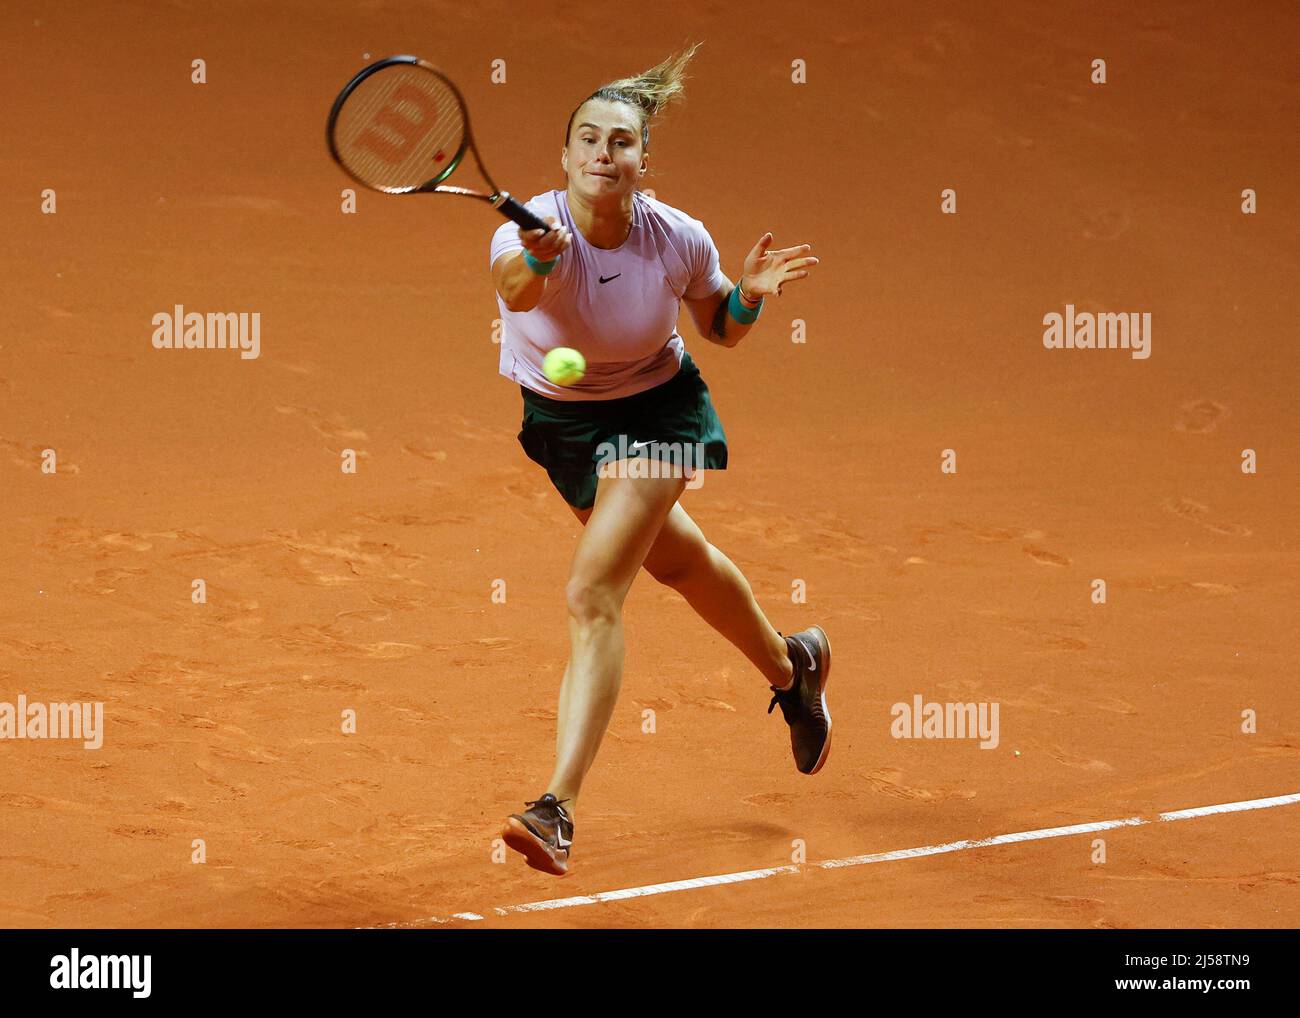 Stuttgart, Alemania, 21st, abril de 2022. La tenista Aryna Sabalenka en acción en el Porsche Tennis Grand Prix 2022 n Stuttgart el jueves 21 de abril de 2022 © Juergen Hasenkopf / Alamy Live News Foto de stock